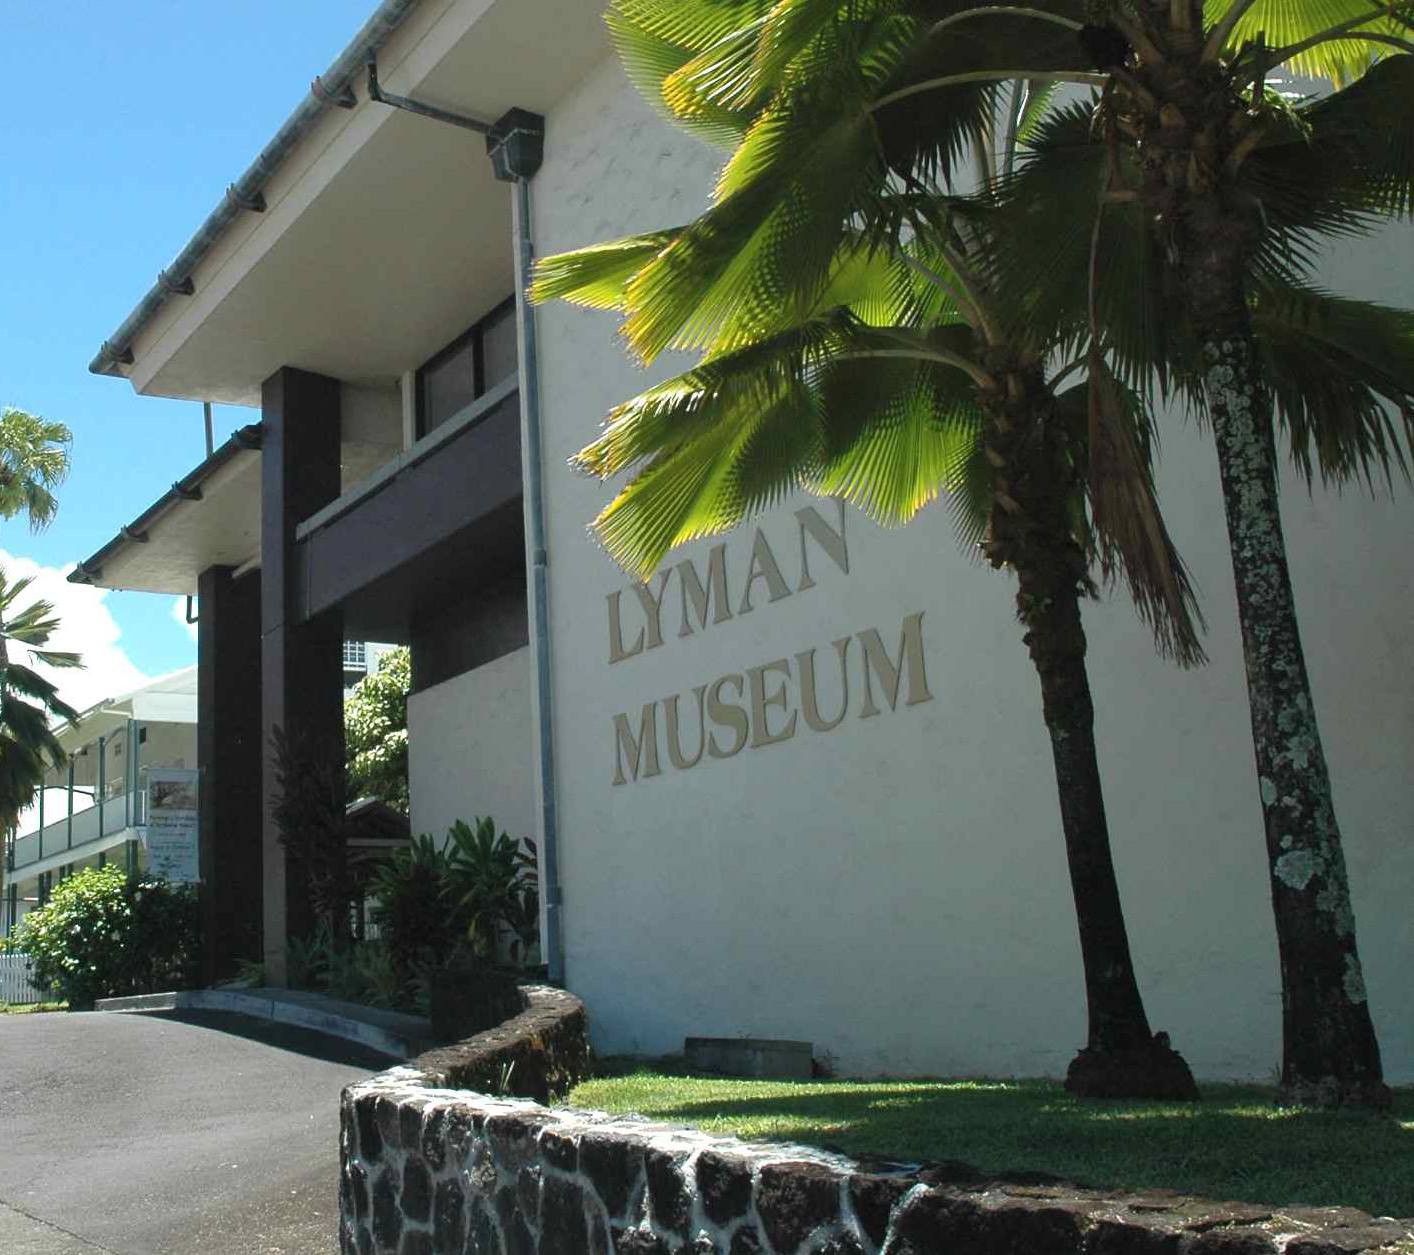 Lyman House Memorial Museum|Museums|Travel